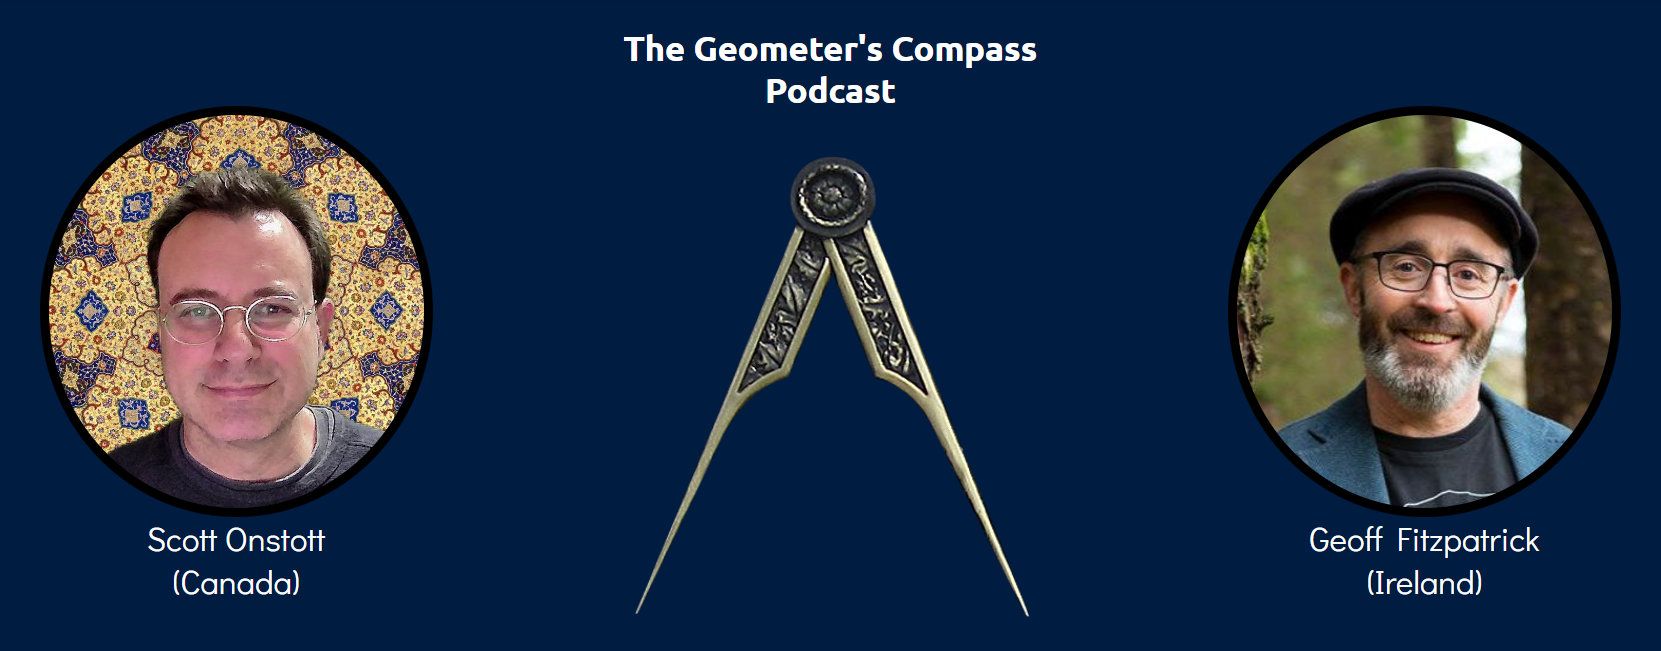 Scott Onstott and Geoff Fitzpatrick portraits surround geometer's compass